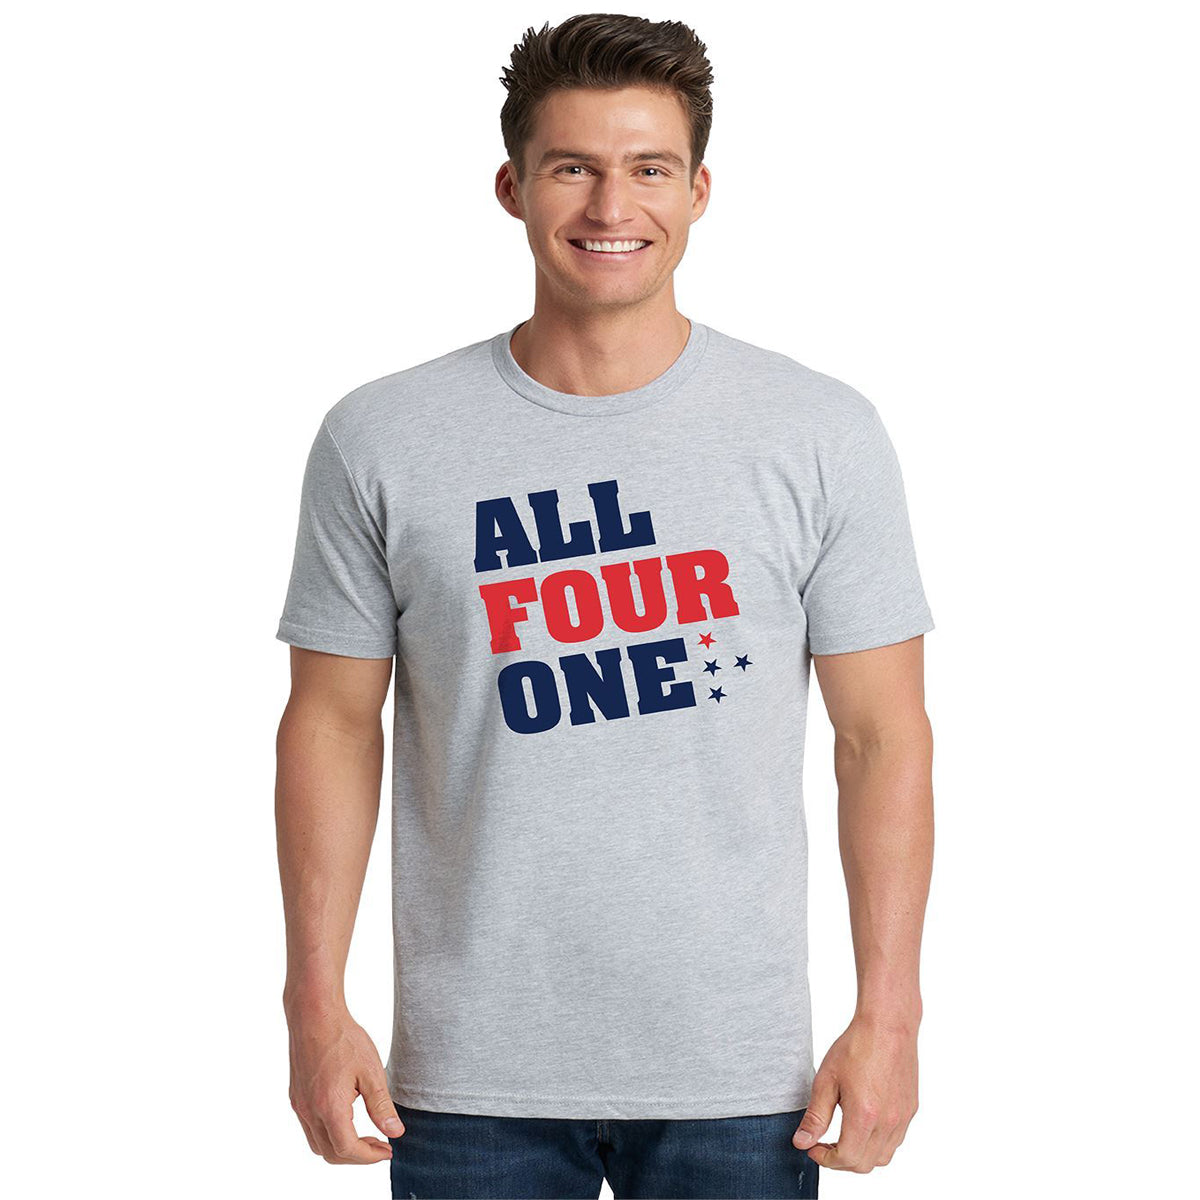 USA World Cup 2019 Champions Shirt - All 4 one T-shirts 411 Youth Medium Ash Youth